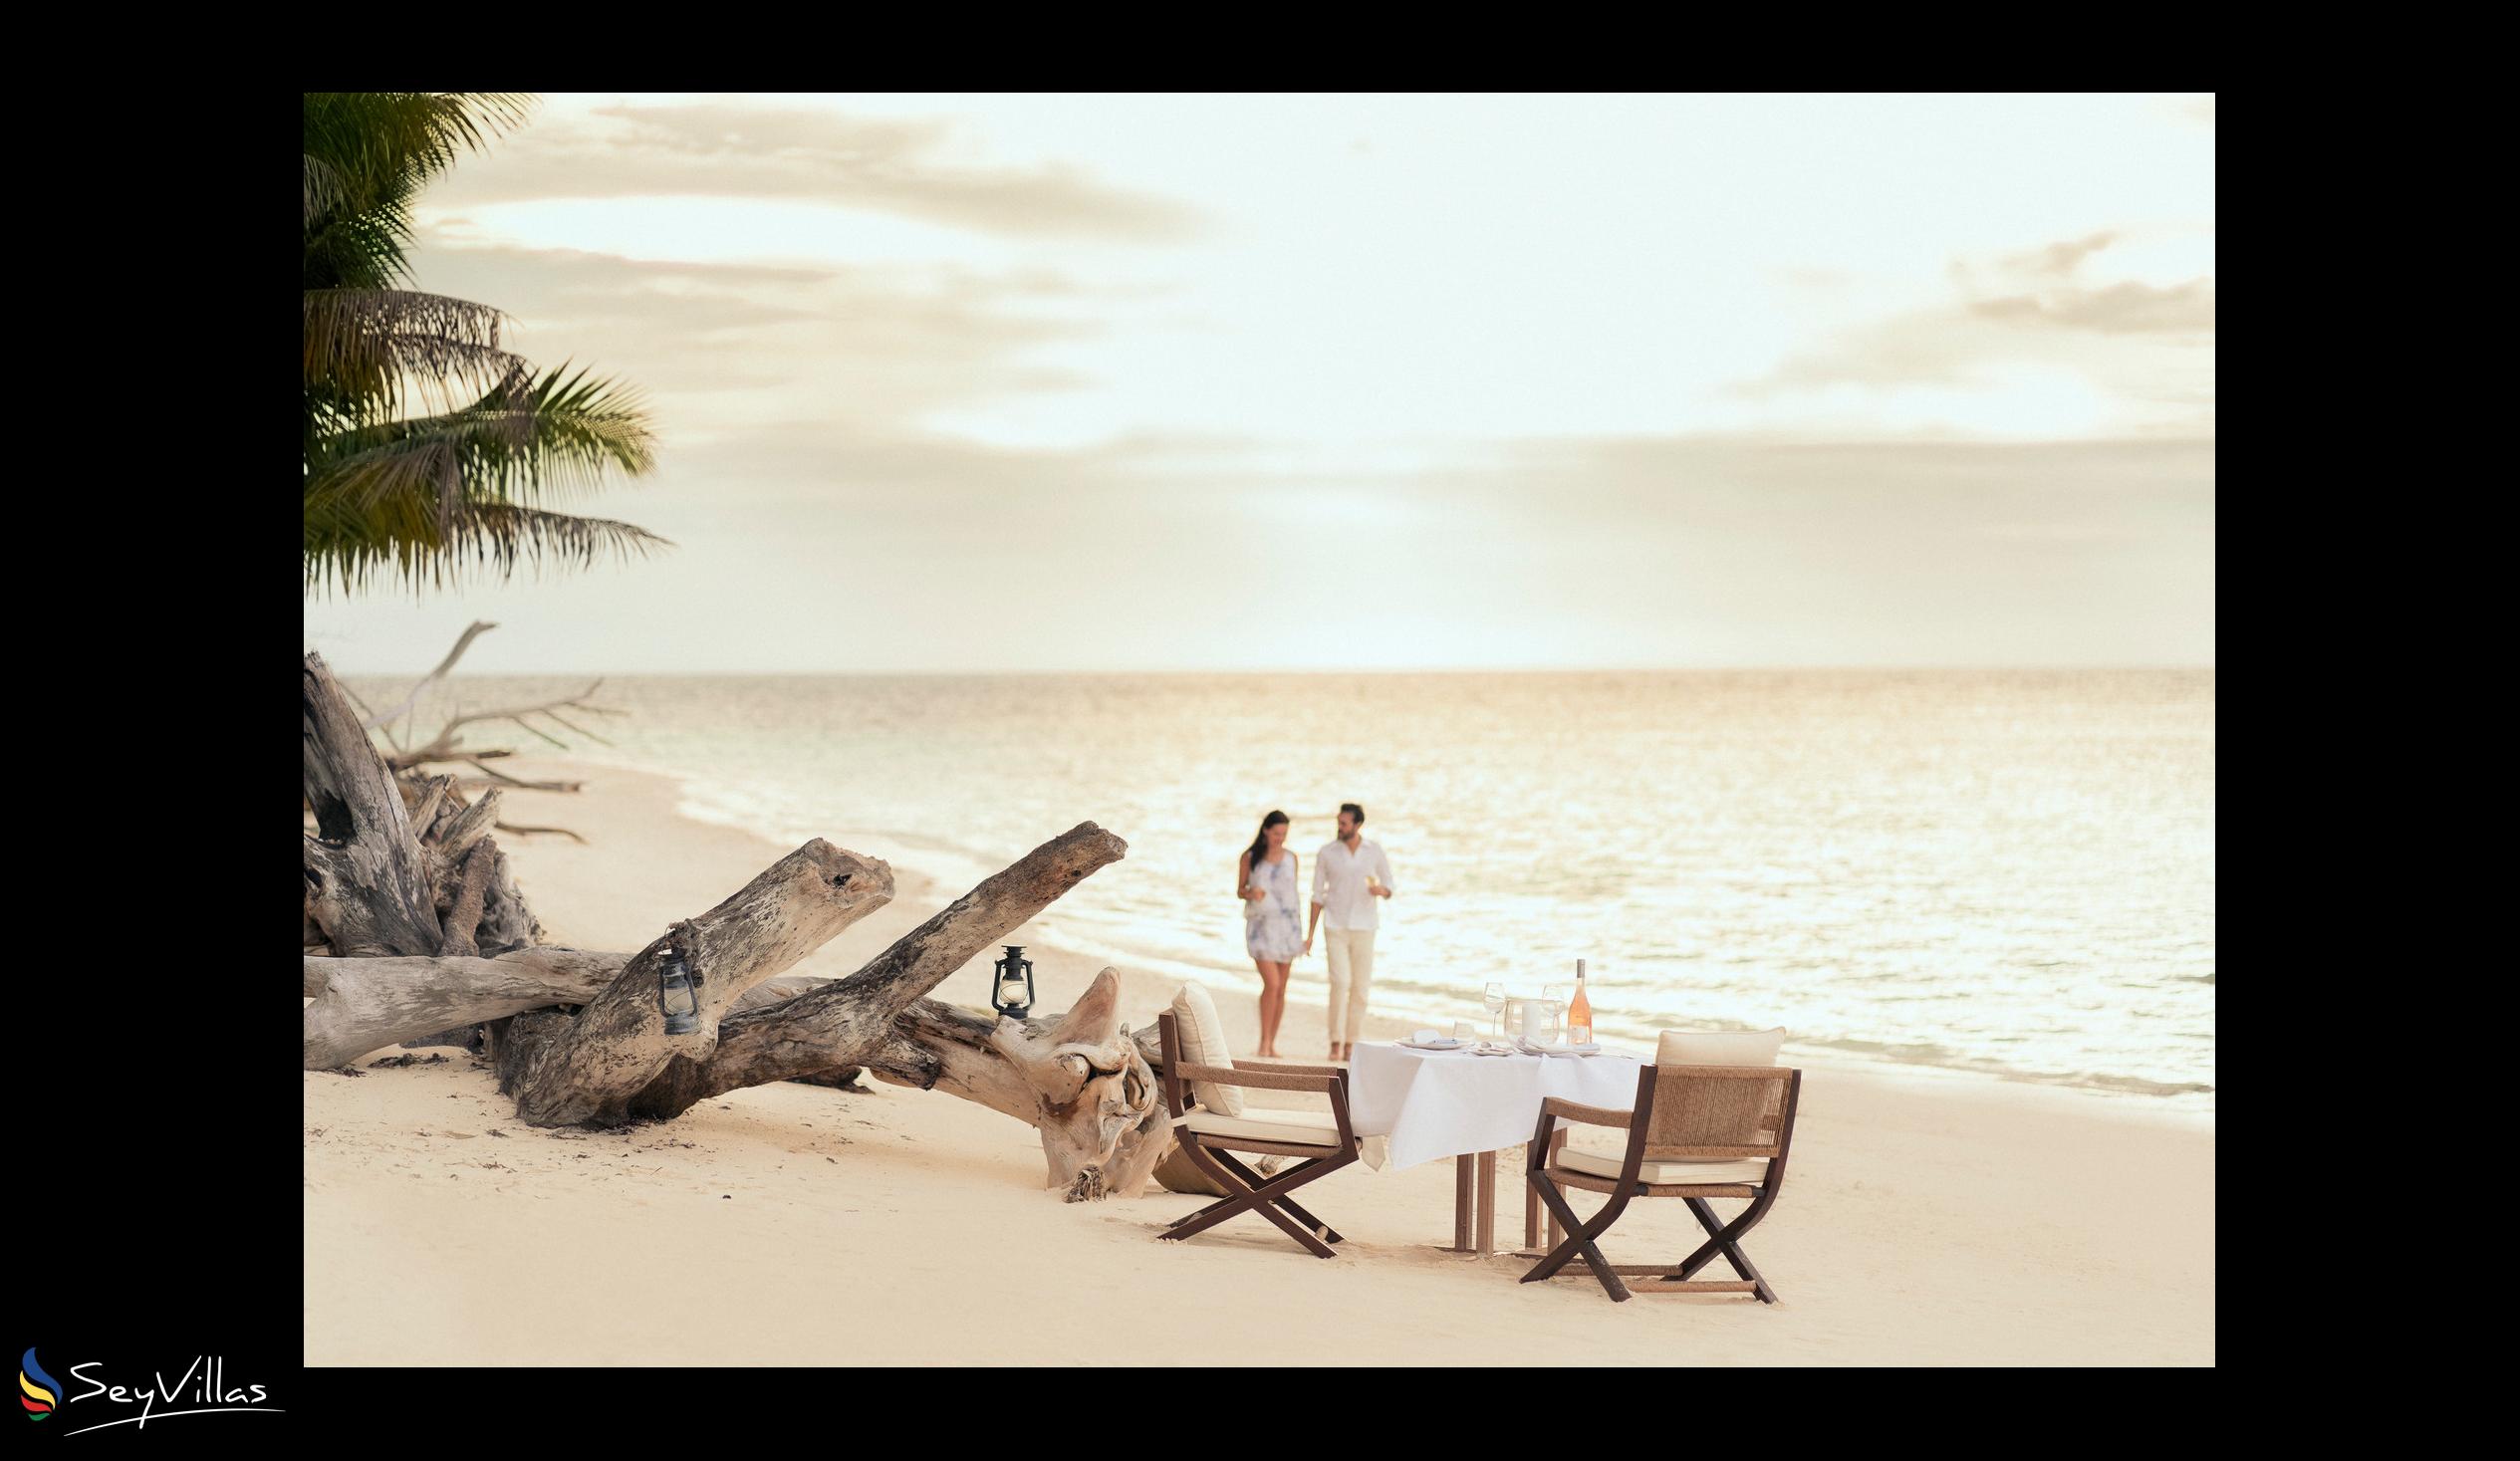 Photo 125: Four Seasons Resort Desroches Island - Outdoor area - Desroches Island (Seychelles)